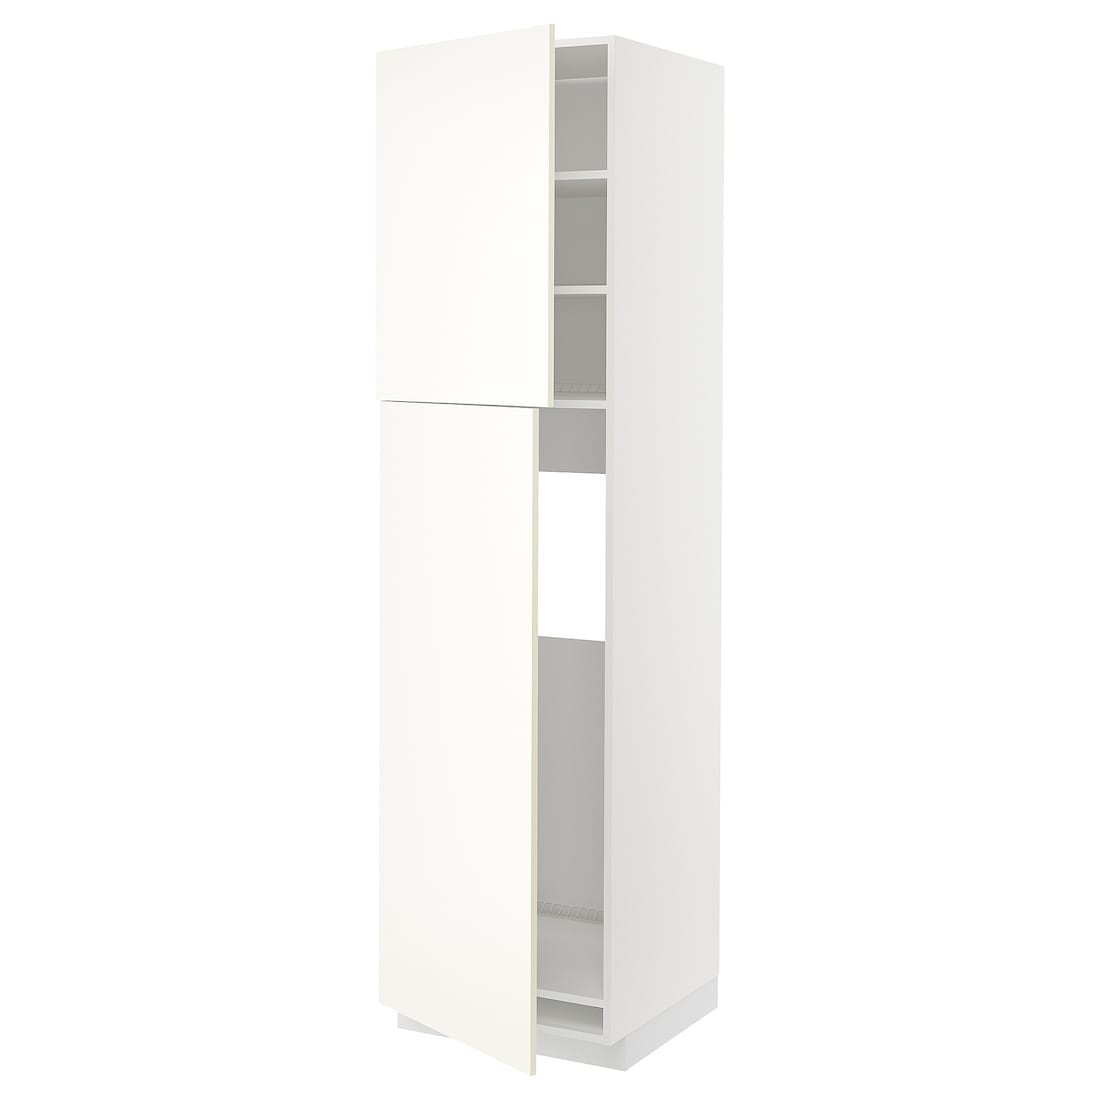 IKEA METOD МЕТОД Высокий шкаф для холодильника, белый / Vallstena белый 19507358 | 195.073.58